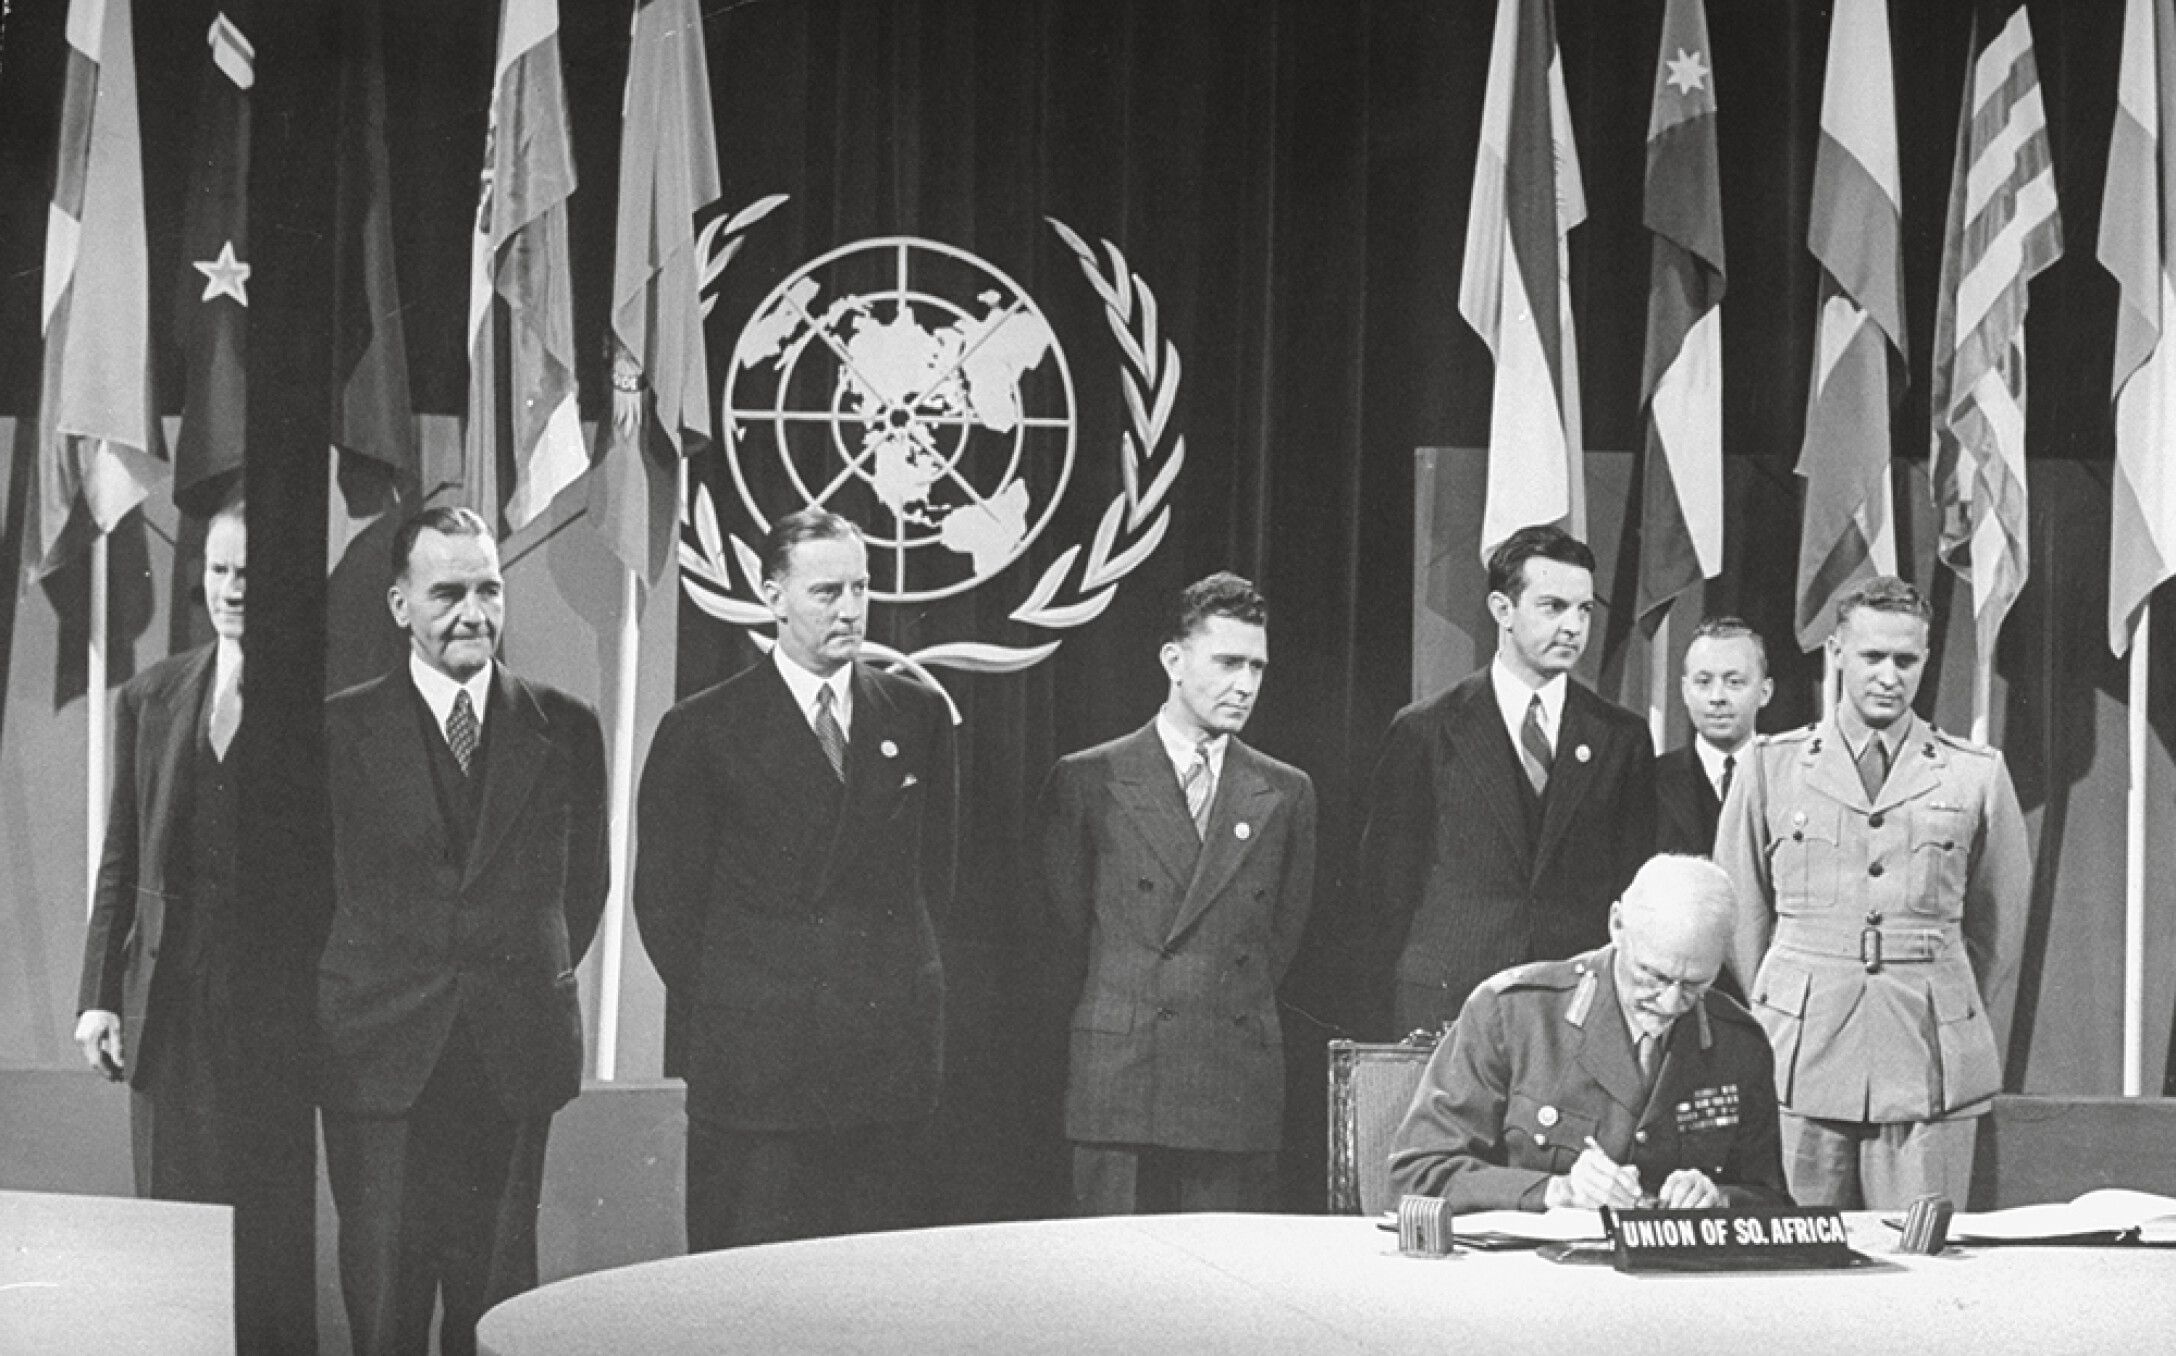 26 оон. Сан-Францисская конференция устав ООН. Устав ООН 1945. ООН 1945 год. Устав организации Объединенных наций (Сан-Франциско, 26 июня 1945 г.).